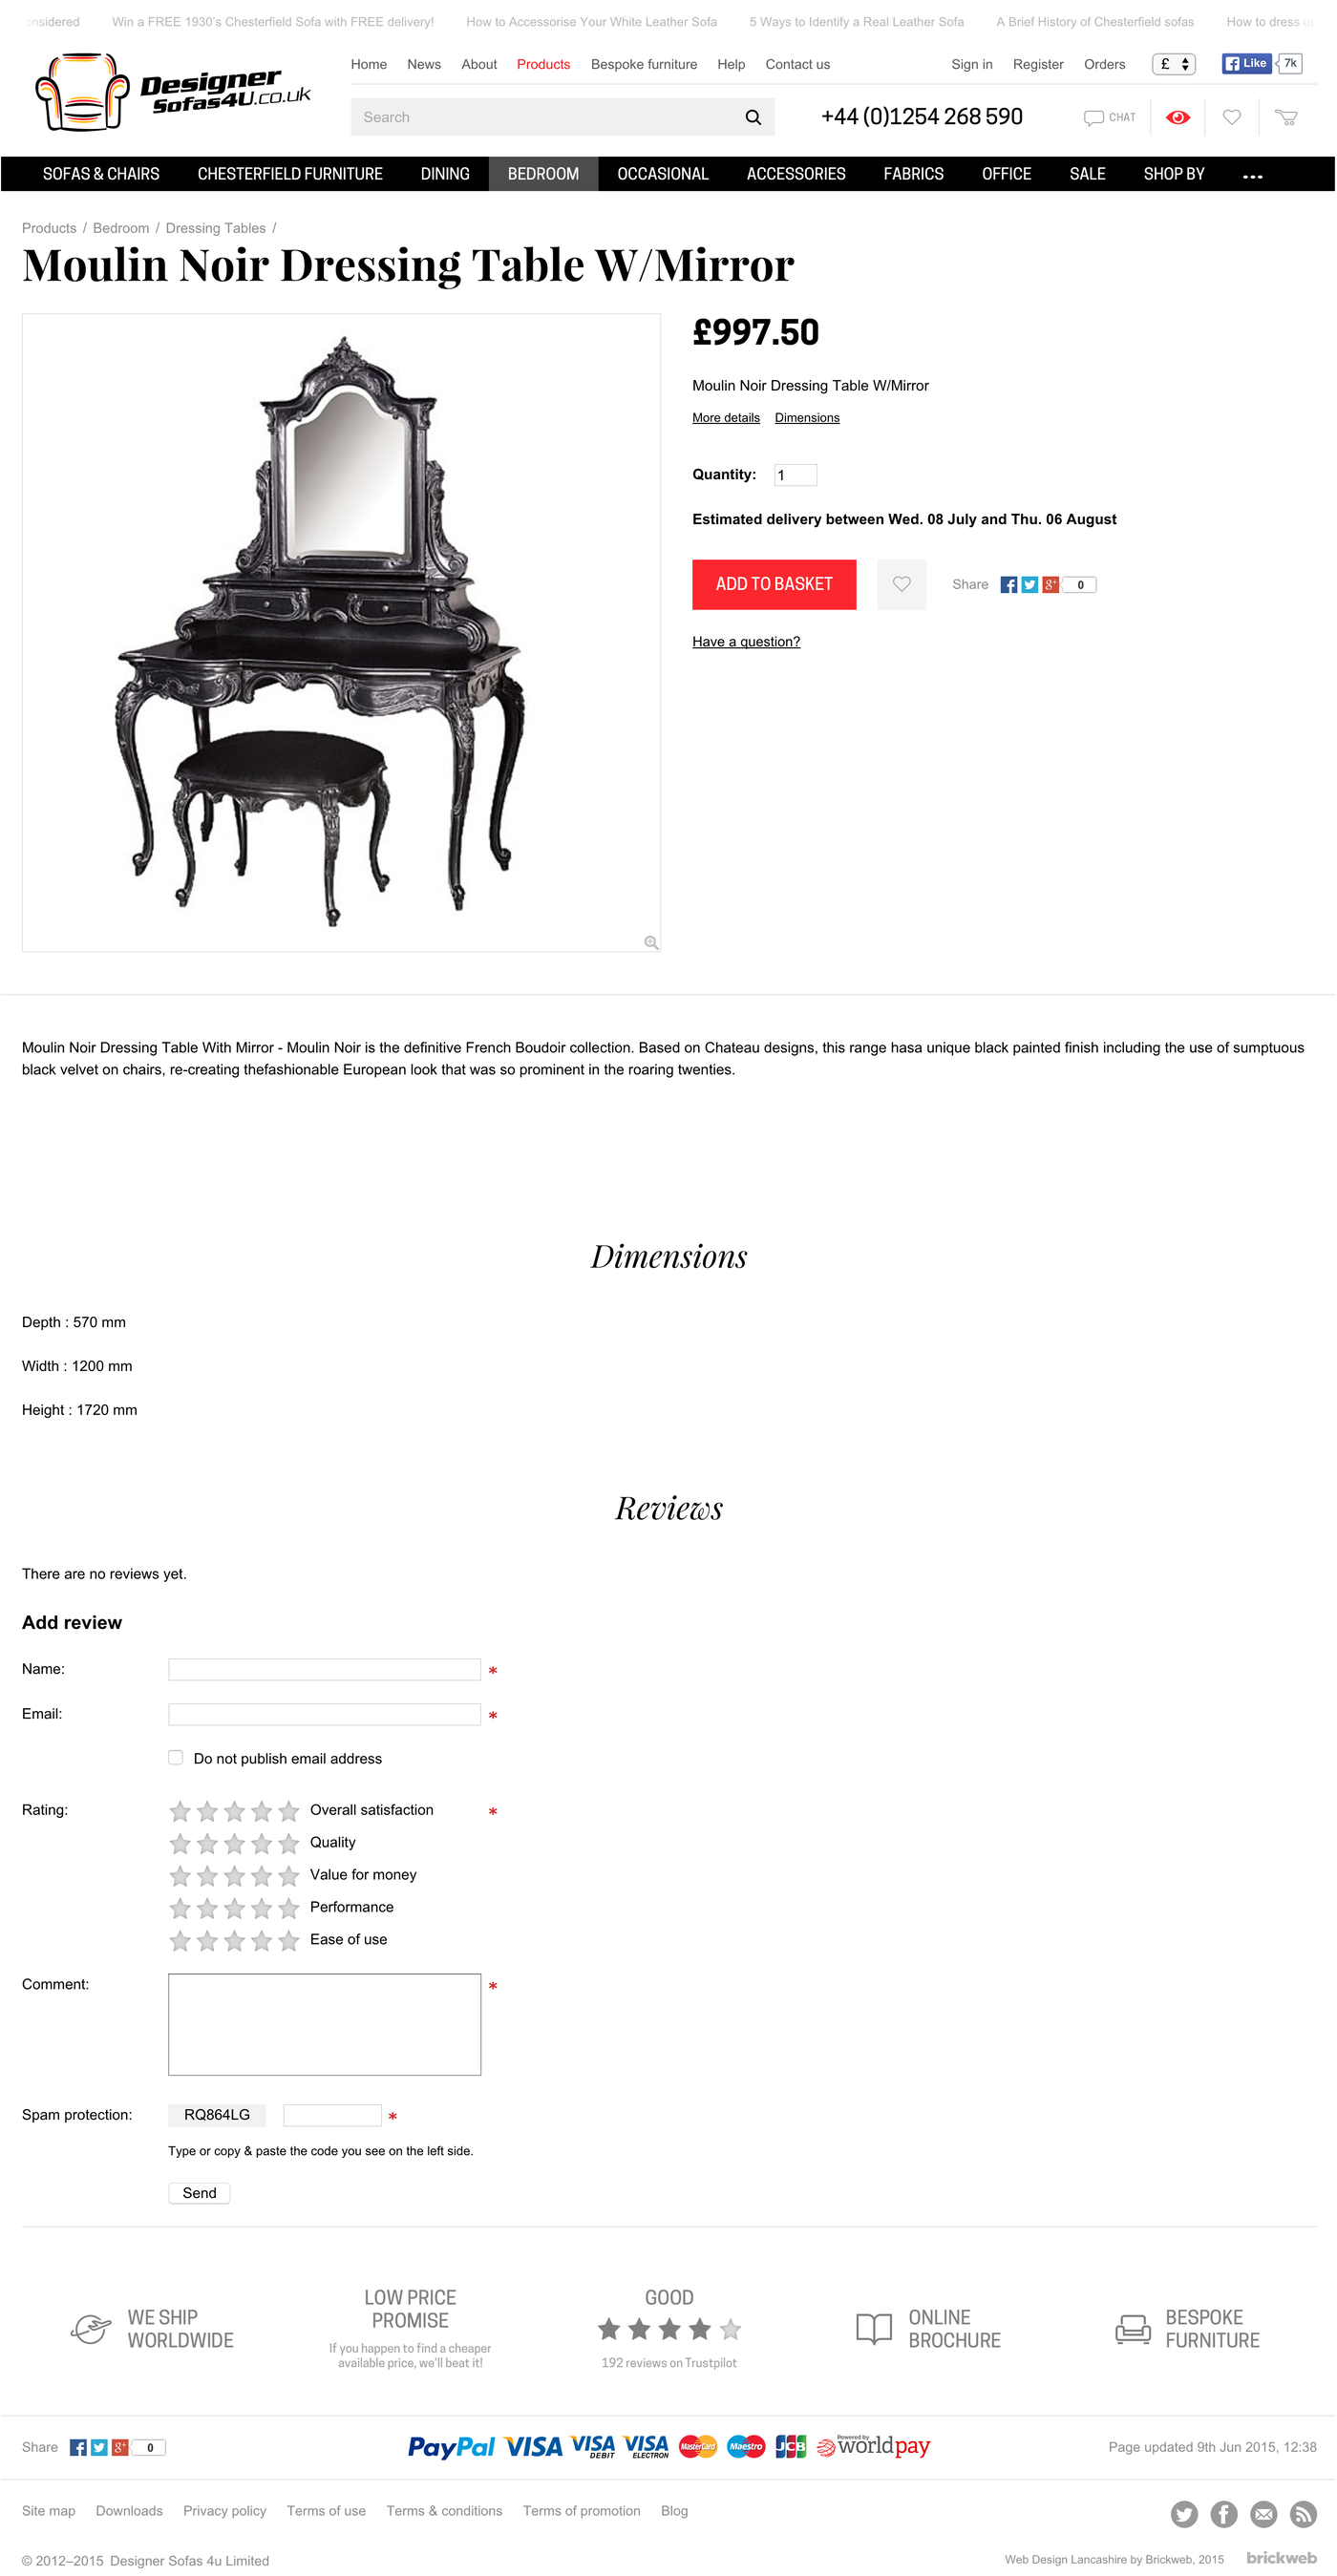 Designer Sofas 4U (2015) Product page